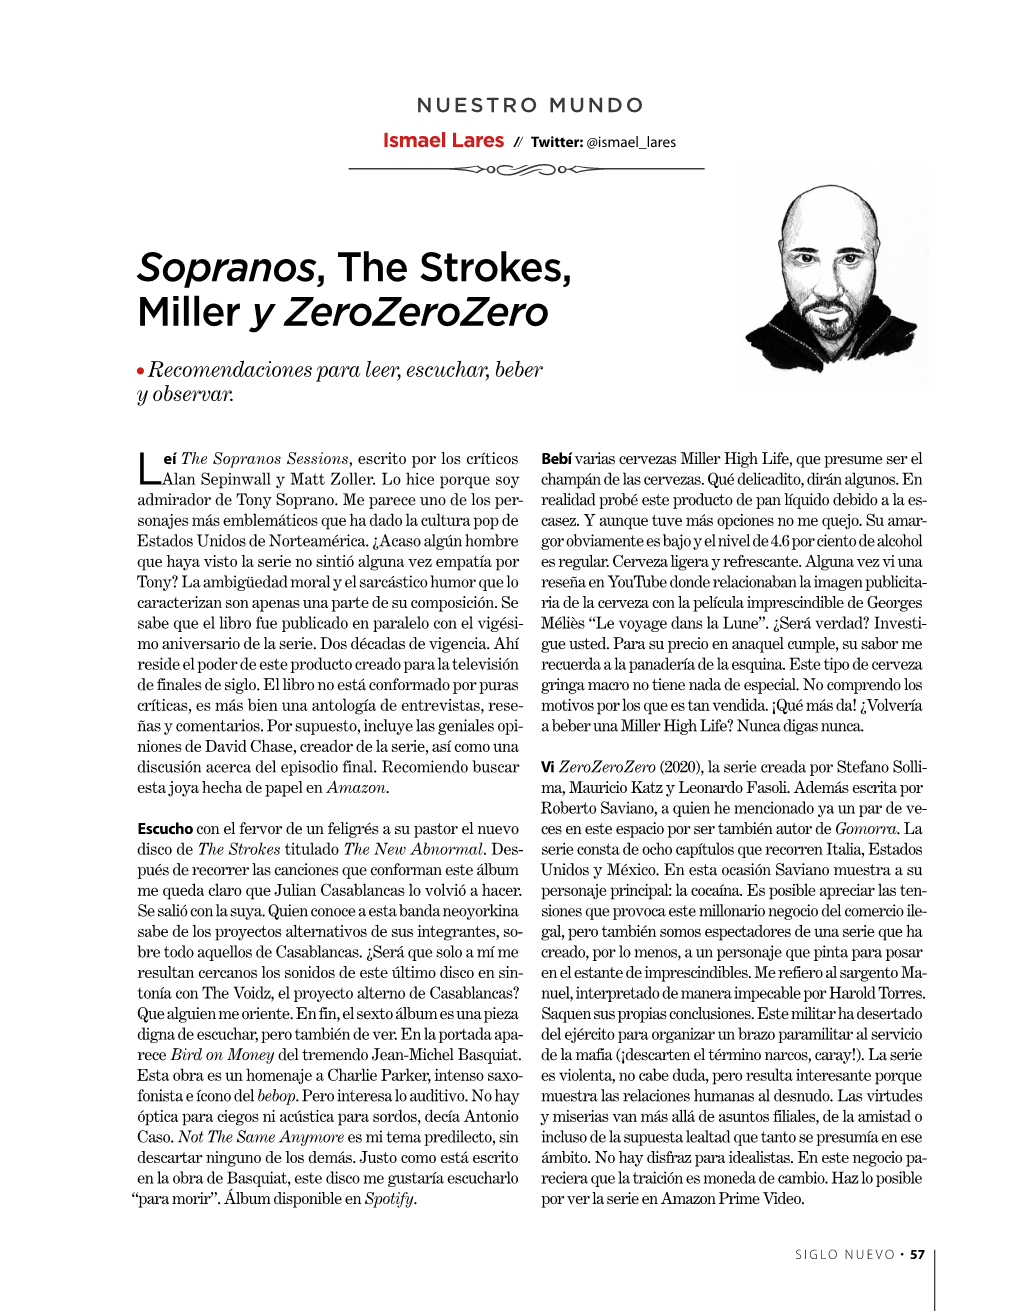 Sopranos, the Strokes, Miller Y Zerozerozero